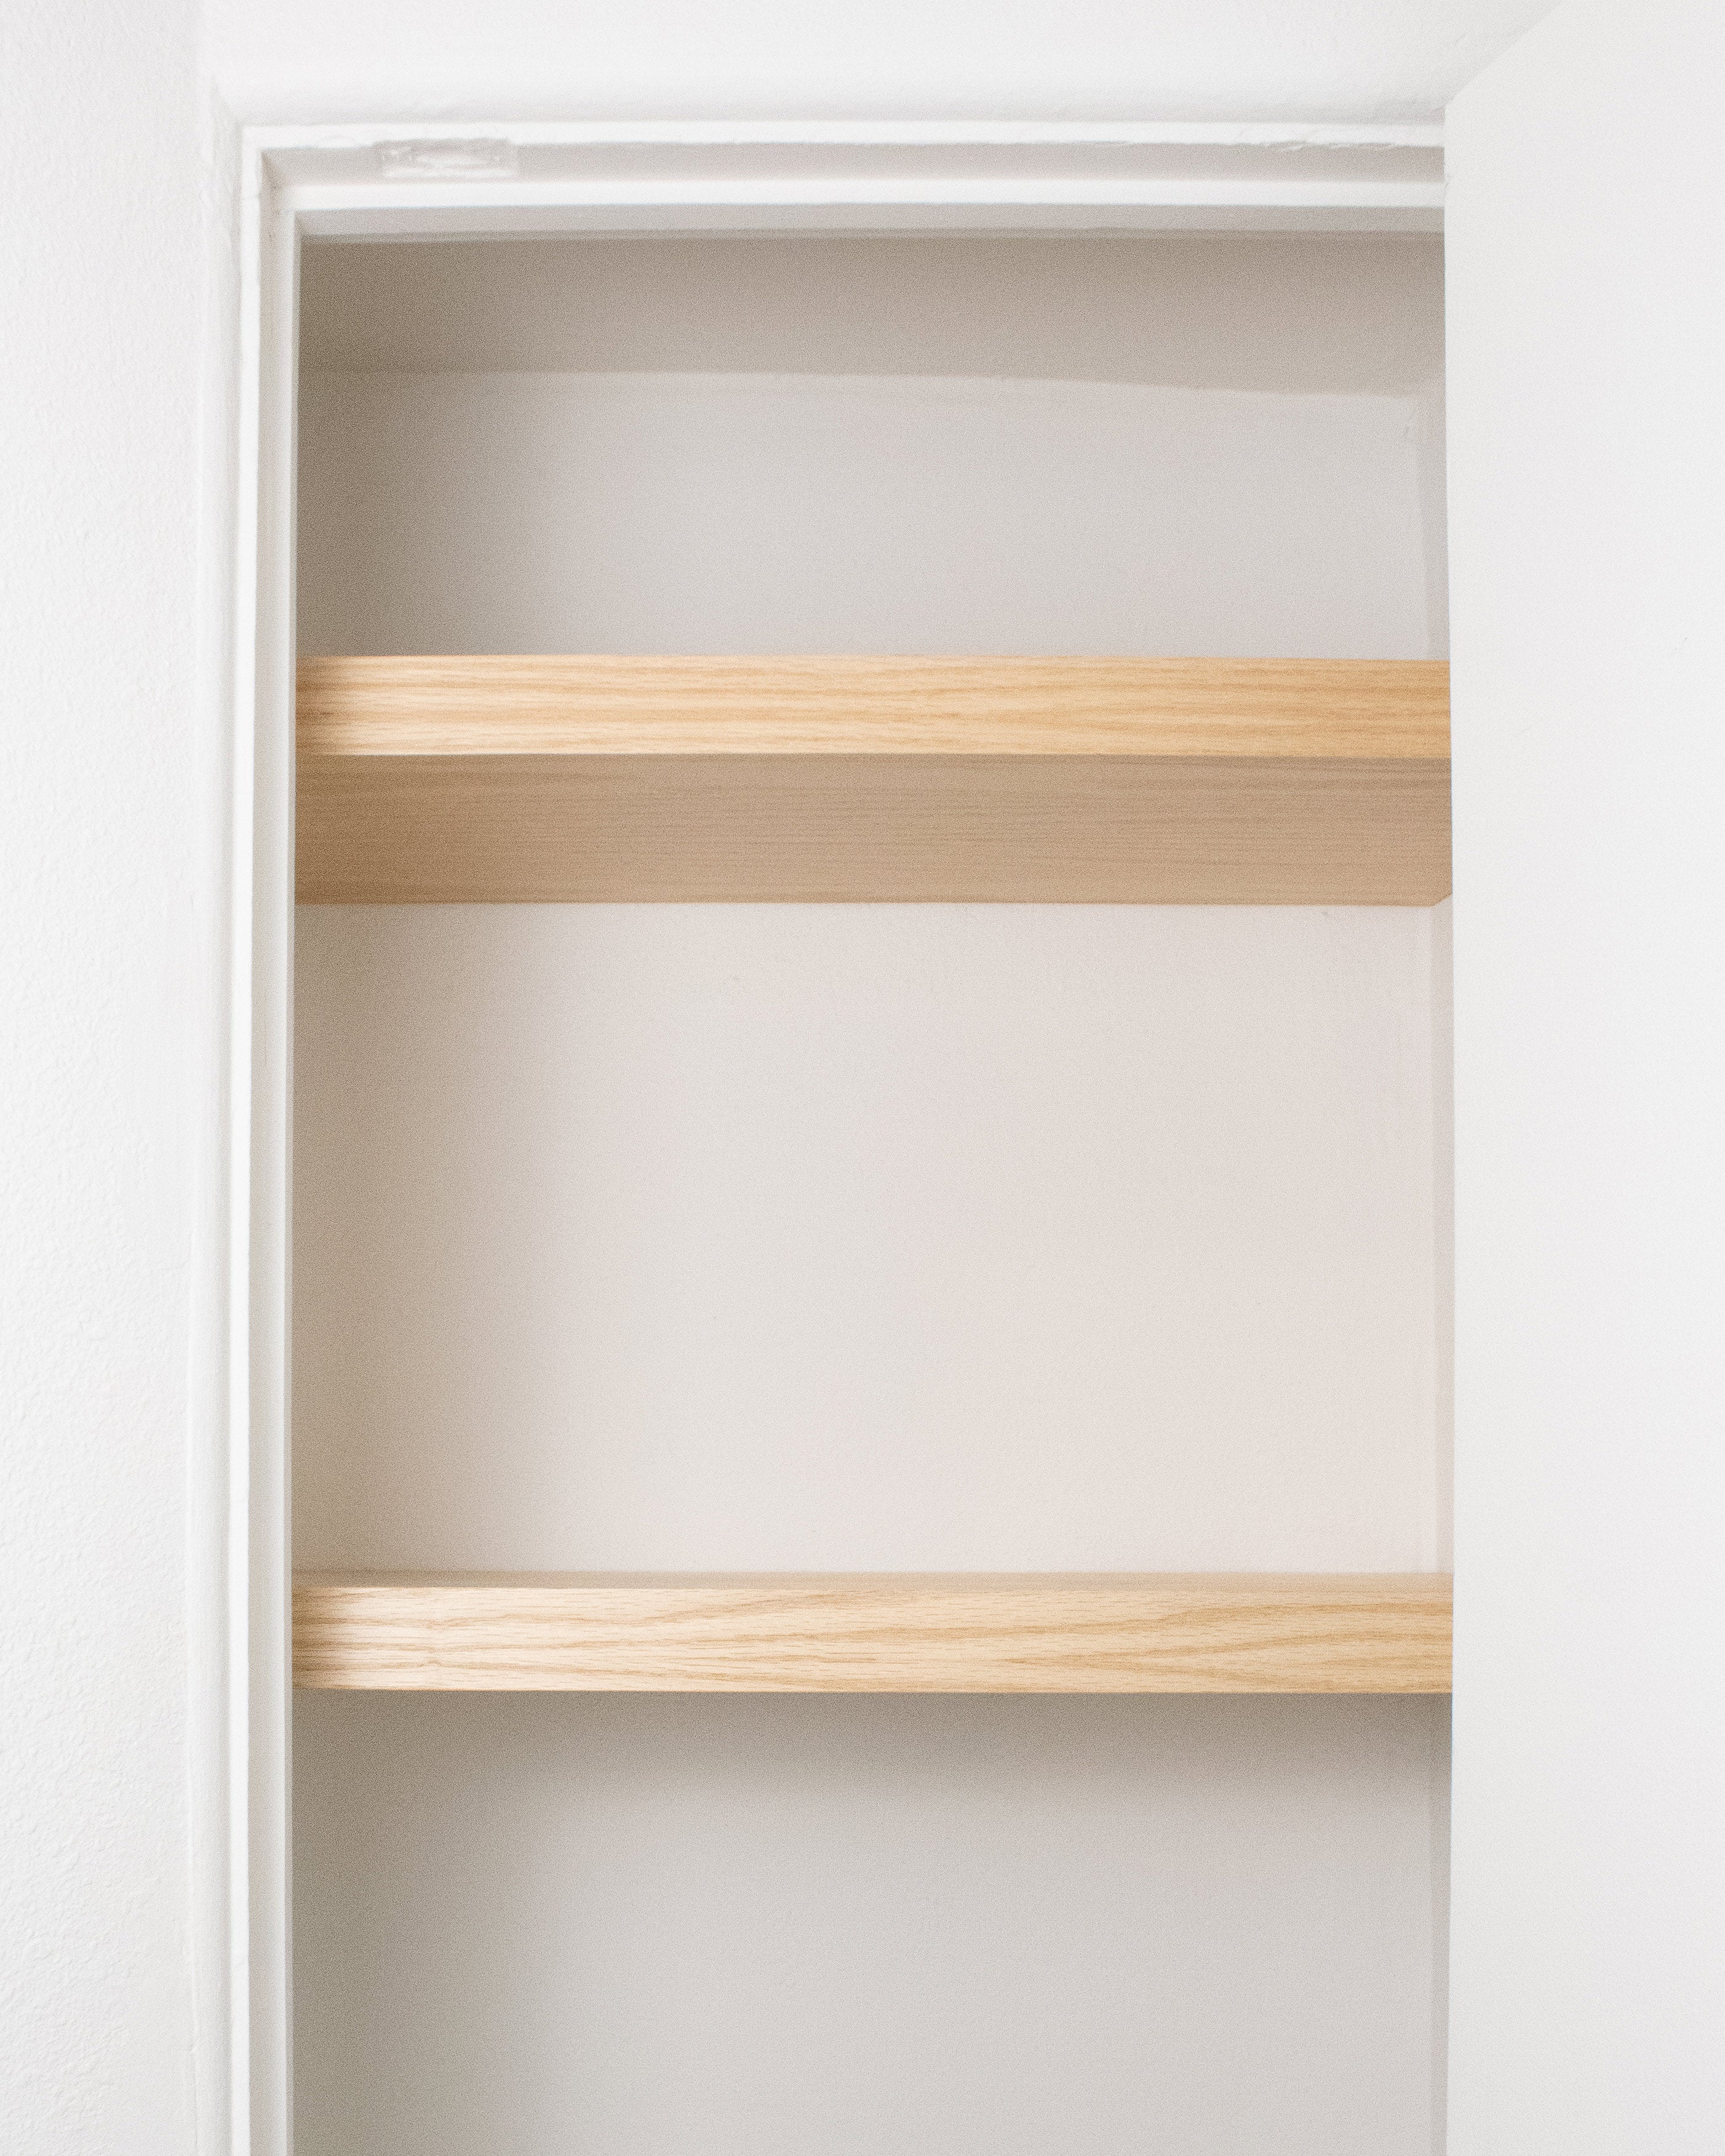 Bleached Oak 2-4" thick Cabinet Top / Slab Shelf